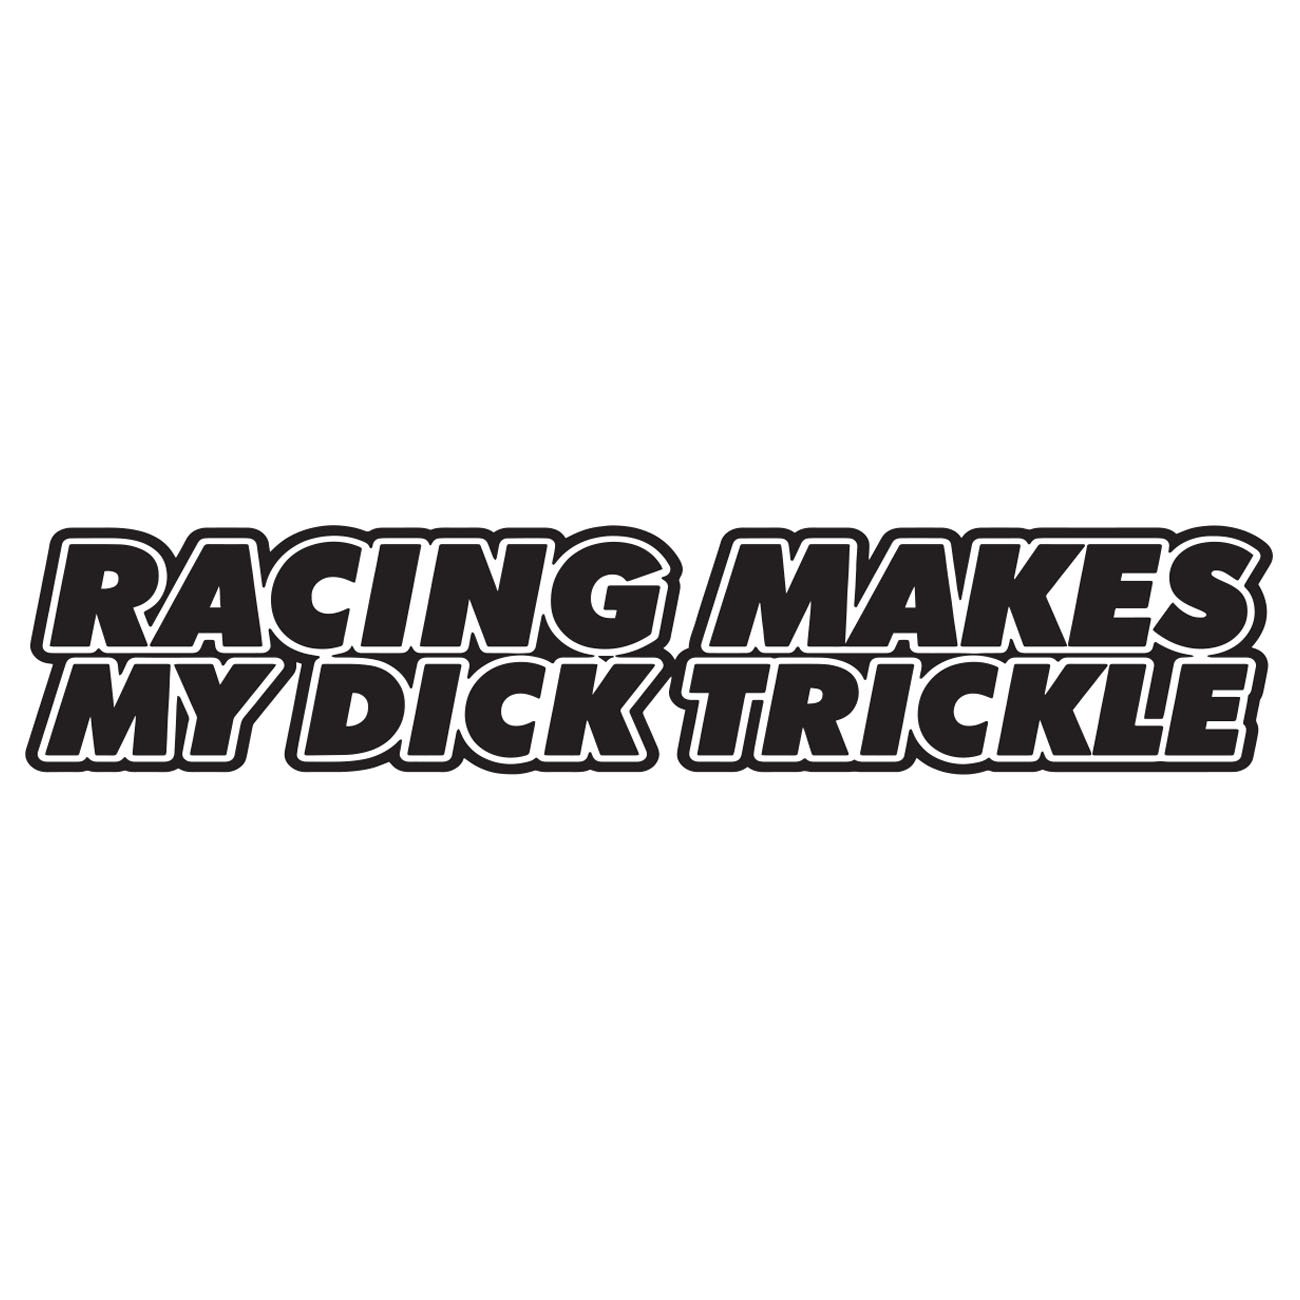 Racing makes my dick trickle